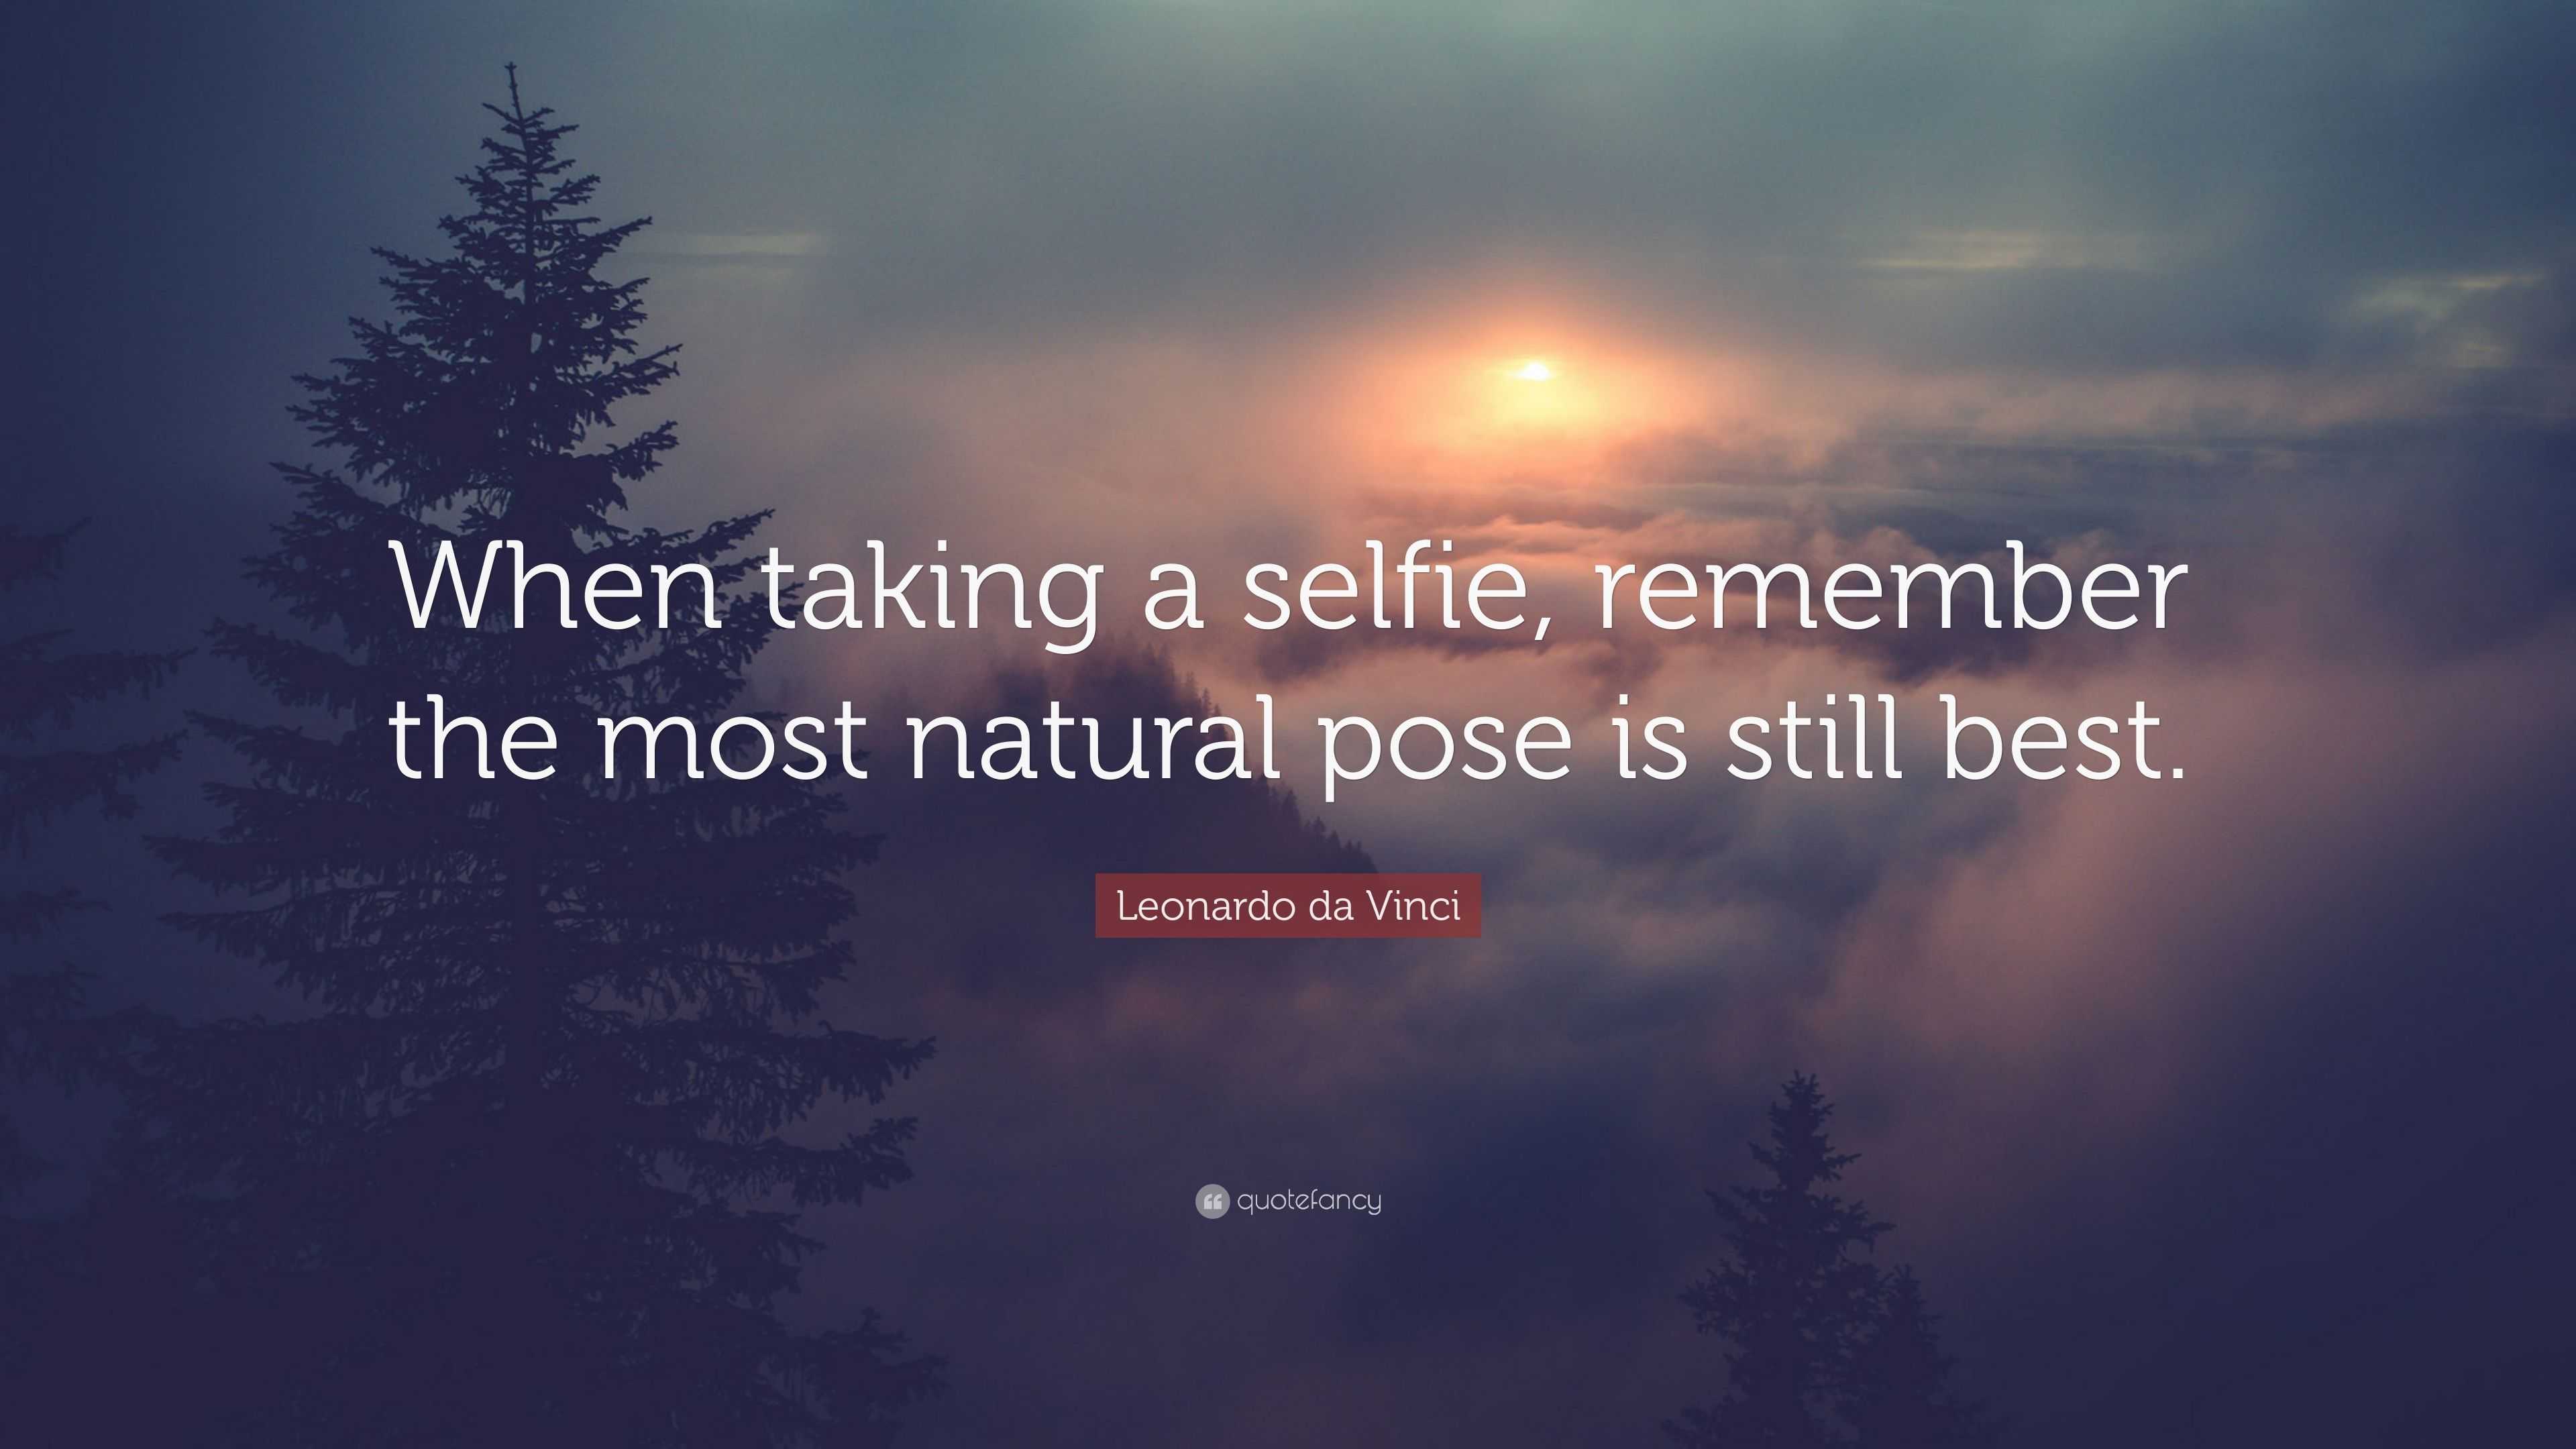 Leonardo da Vinci Quote: “When taking a selfie, remember the most natural  pose is still best.”